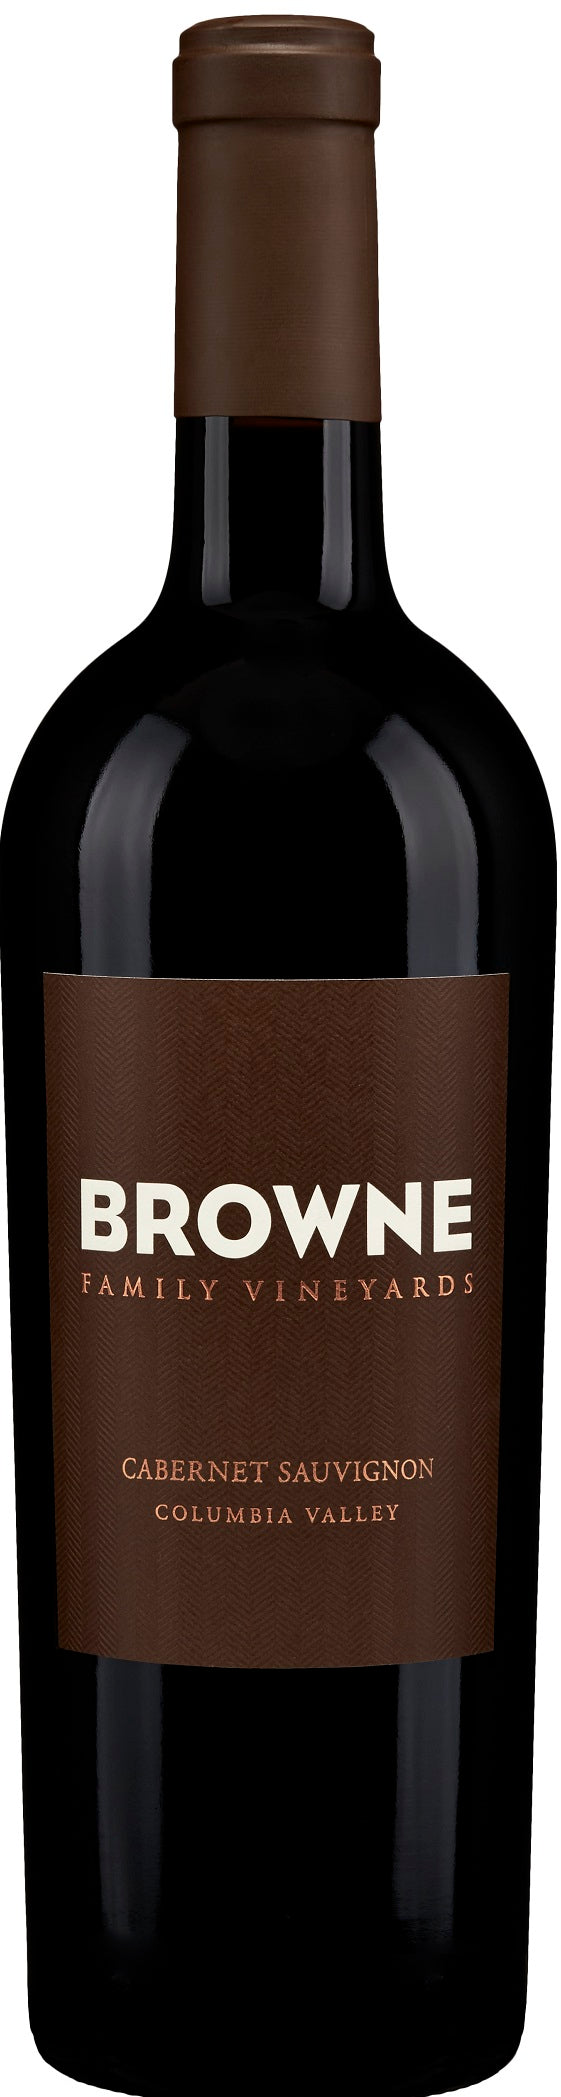 Browne Family Vineyards Cabernet Sauvignon 2015